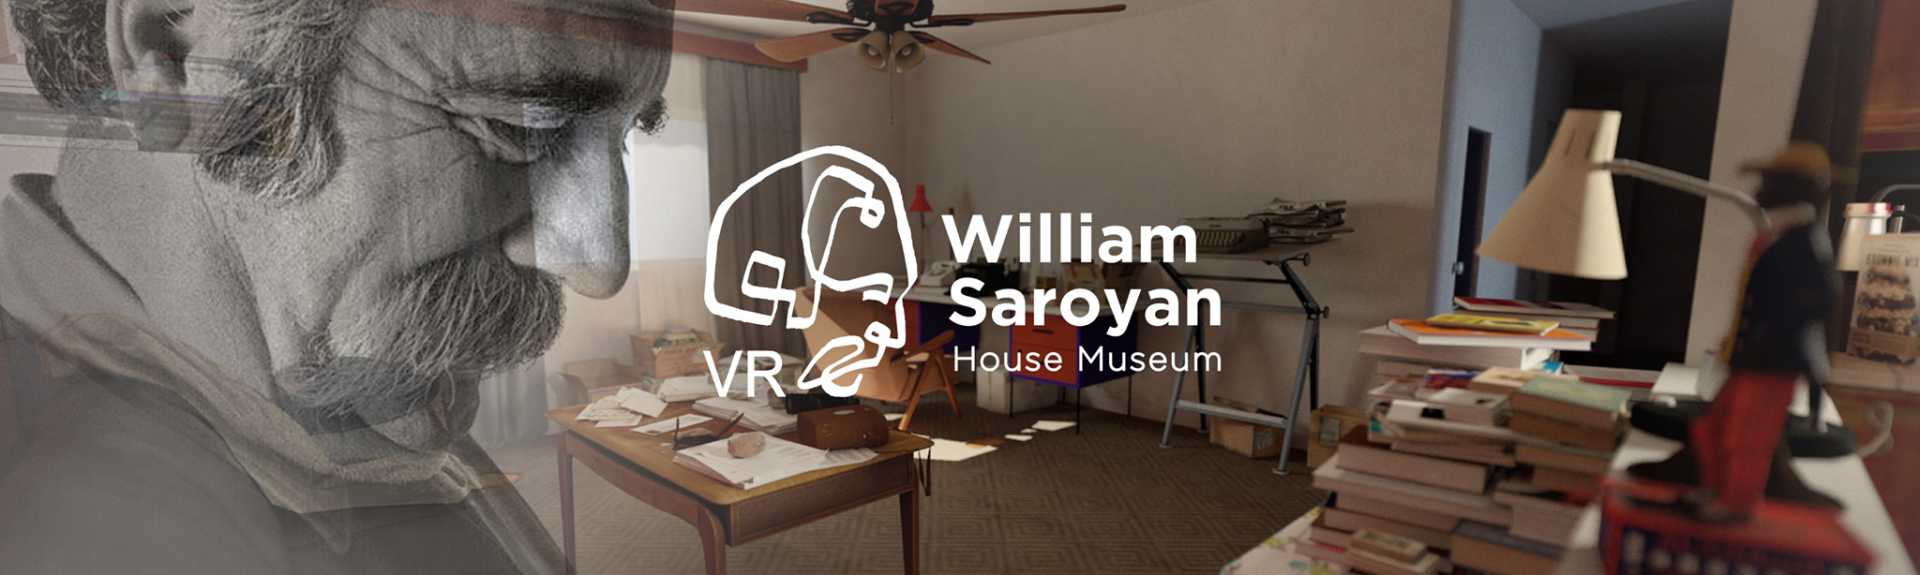 William Saroyan House-Museum VR